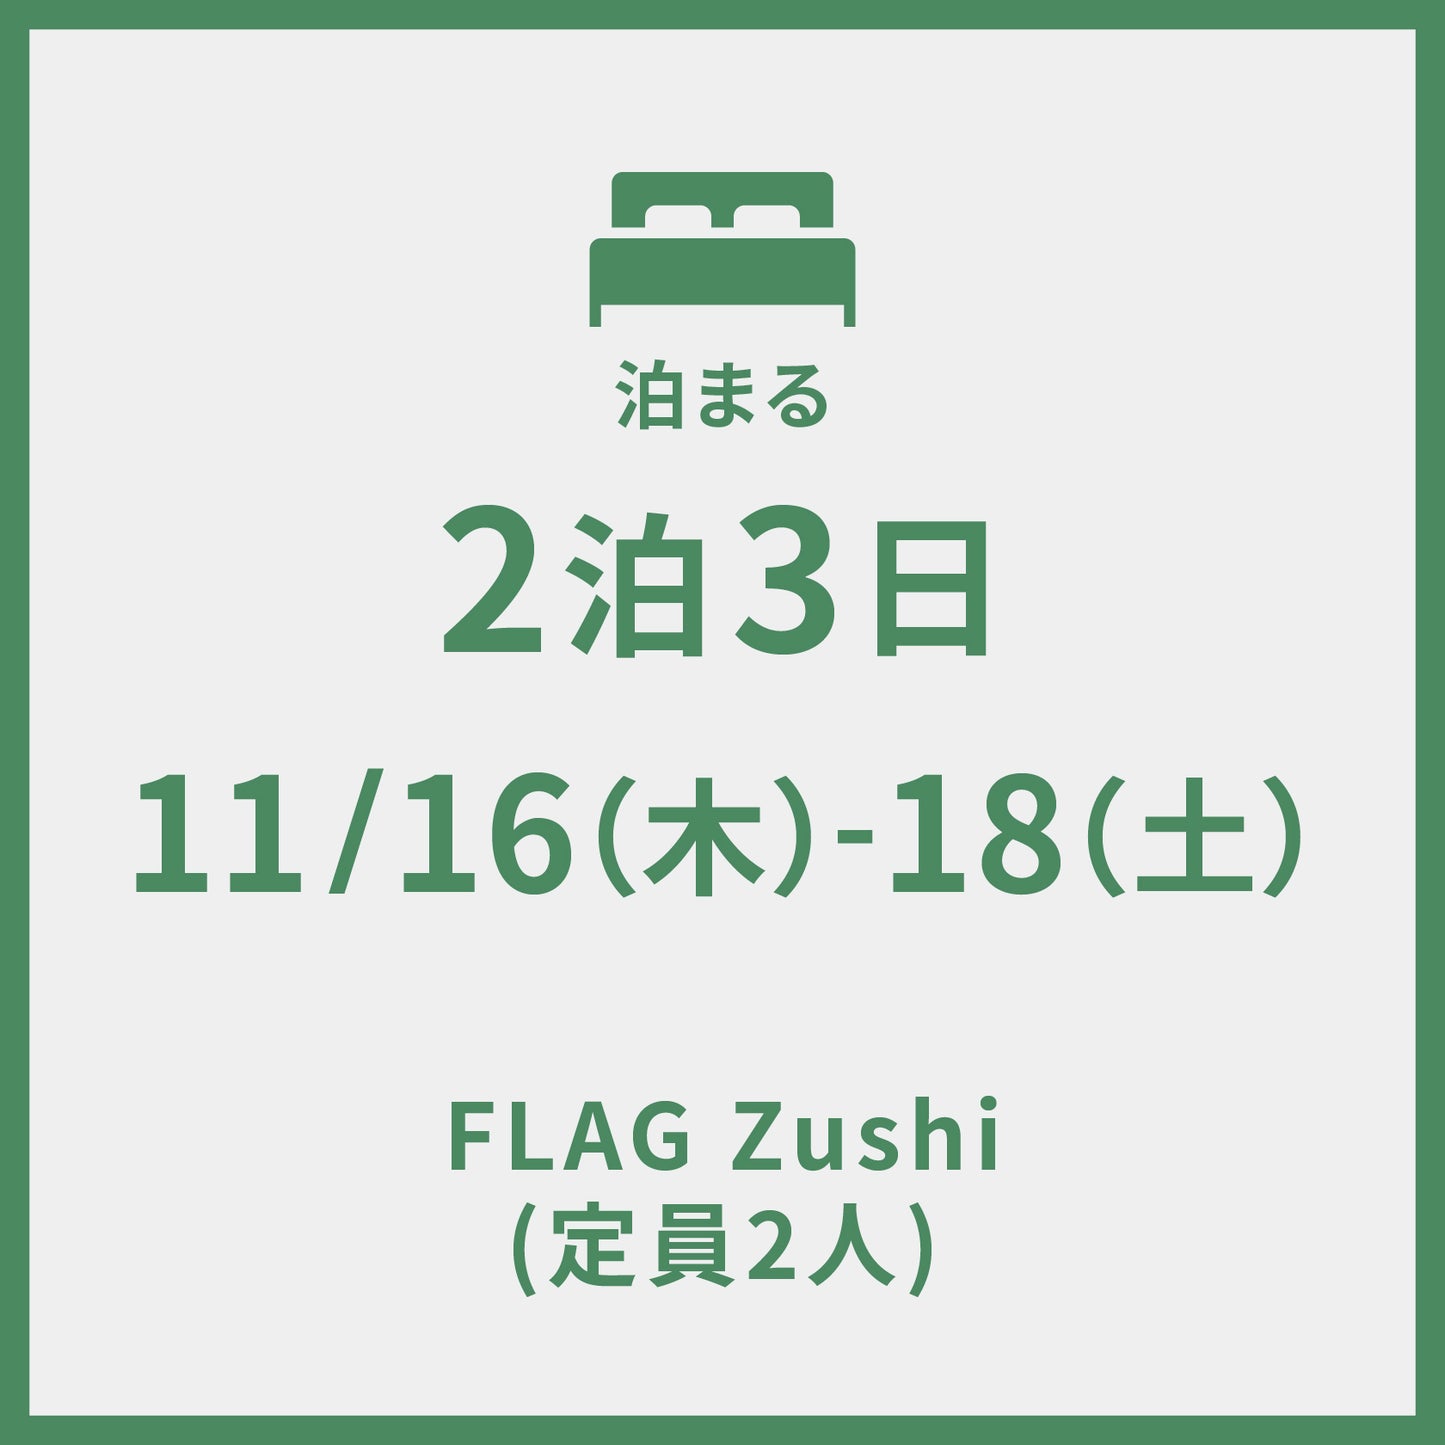 11/16-11/18 ＠FLAG Zushi　2泊3日 (定員2人)